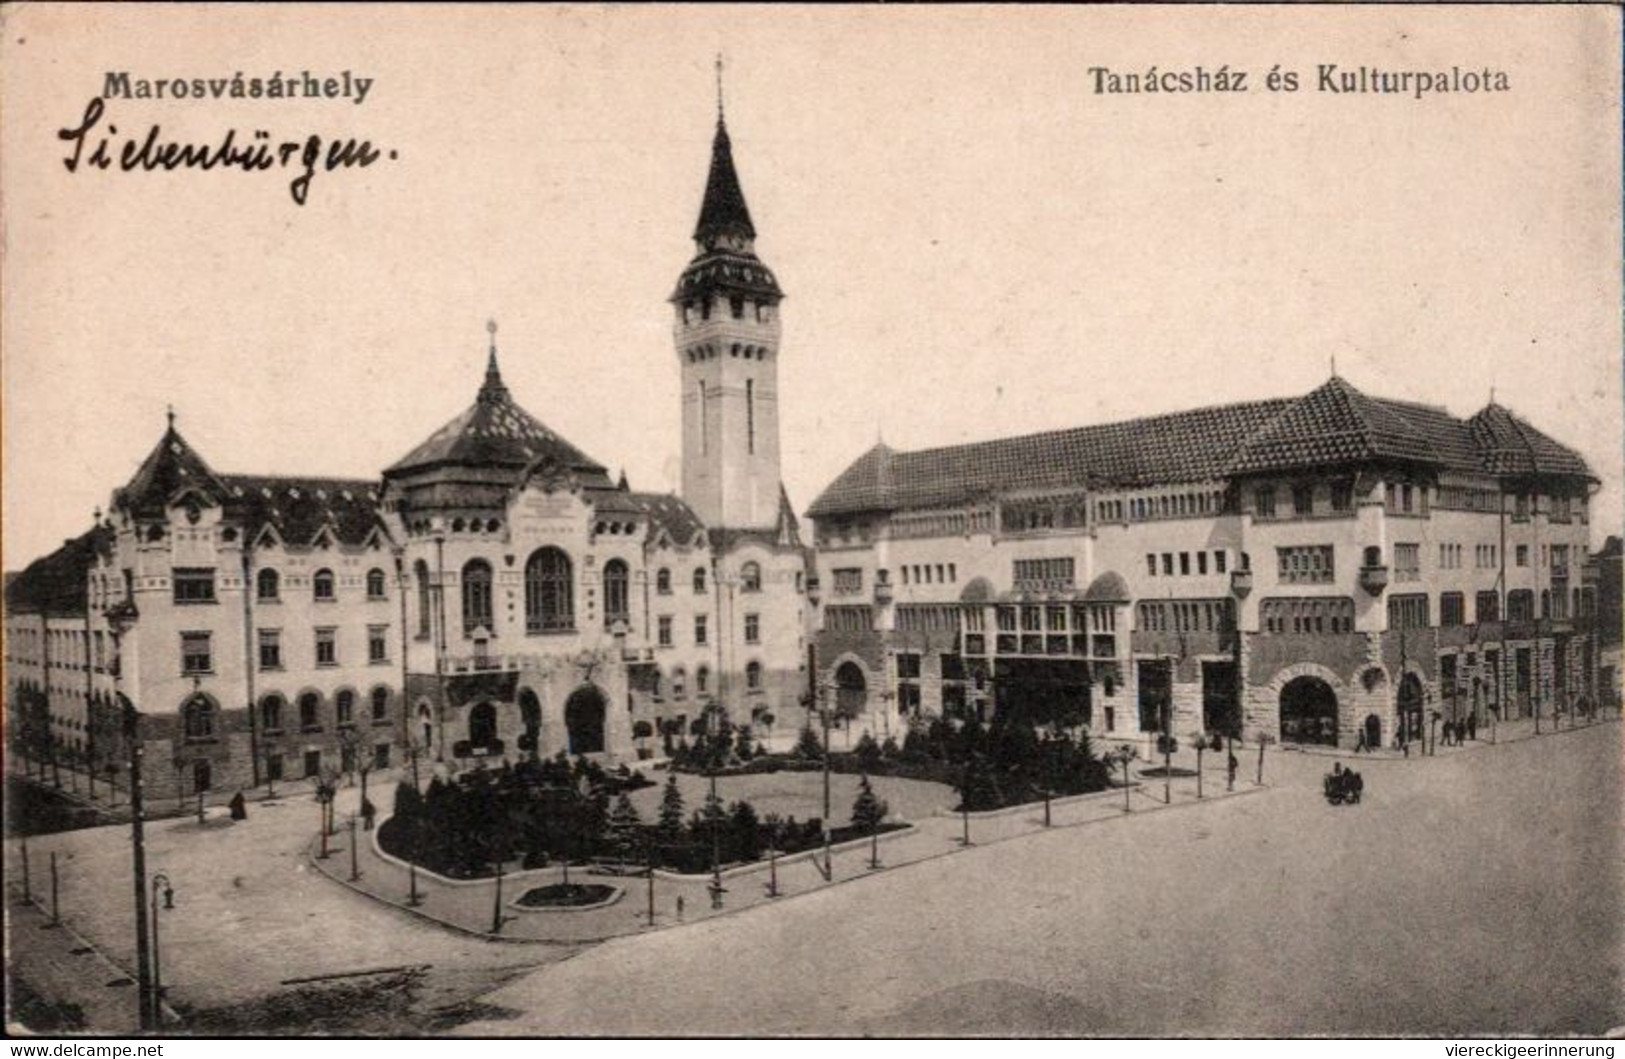 ! Alte Ansichtskarte Targu Mures , Marosvásárhely, Rumänien, Romania,1916 - Romania